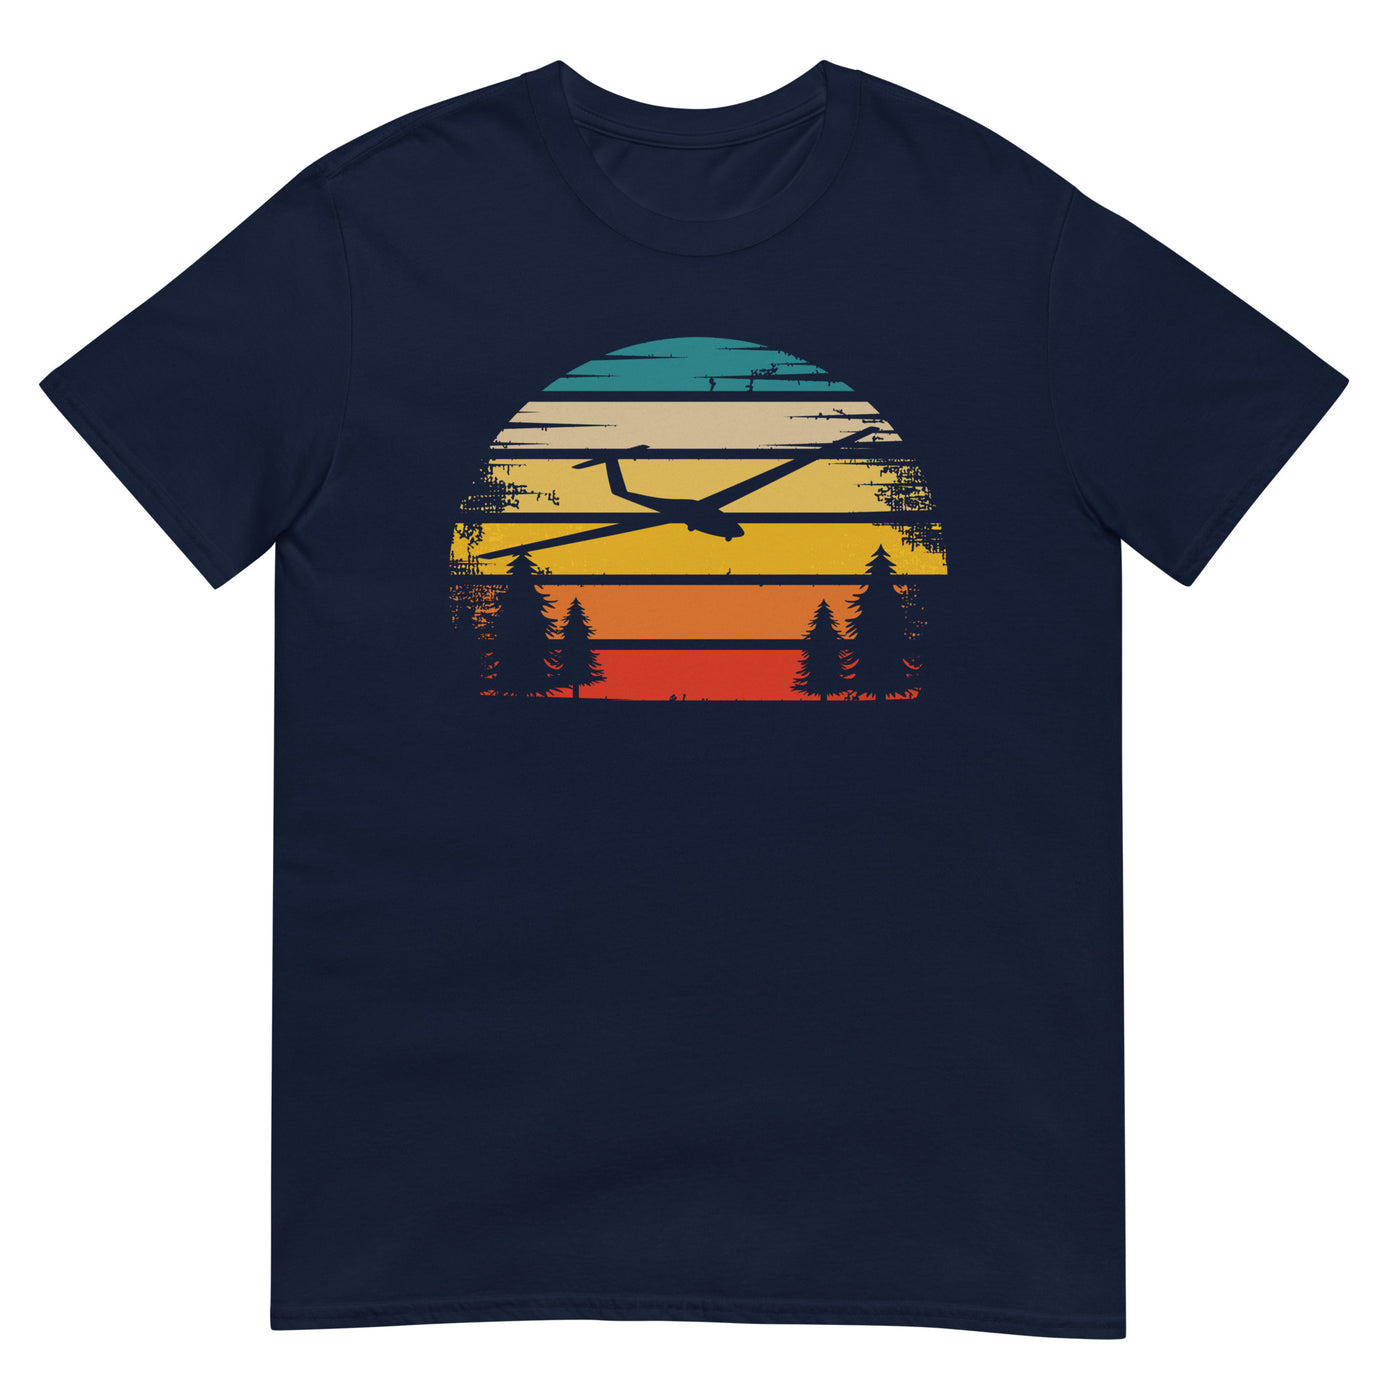 Retro Sonne und Segelflugzeug - T-Shirt (Unisex) berge xxx yyy zzz Navy